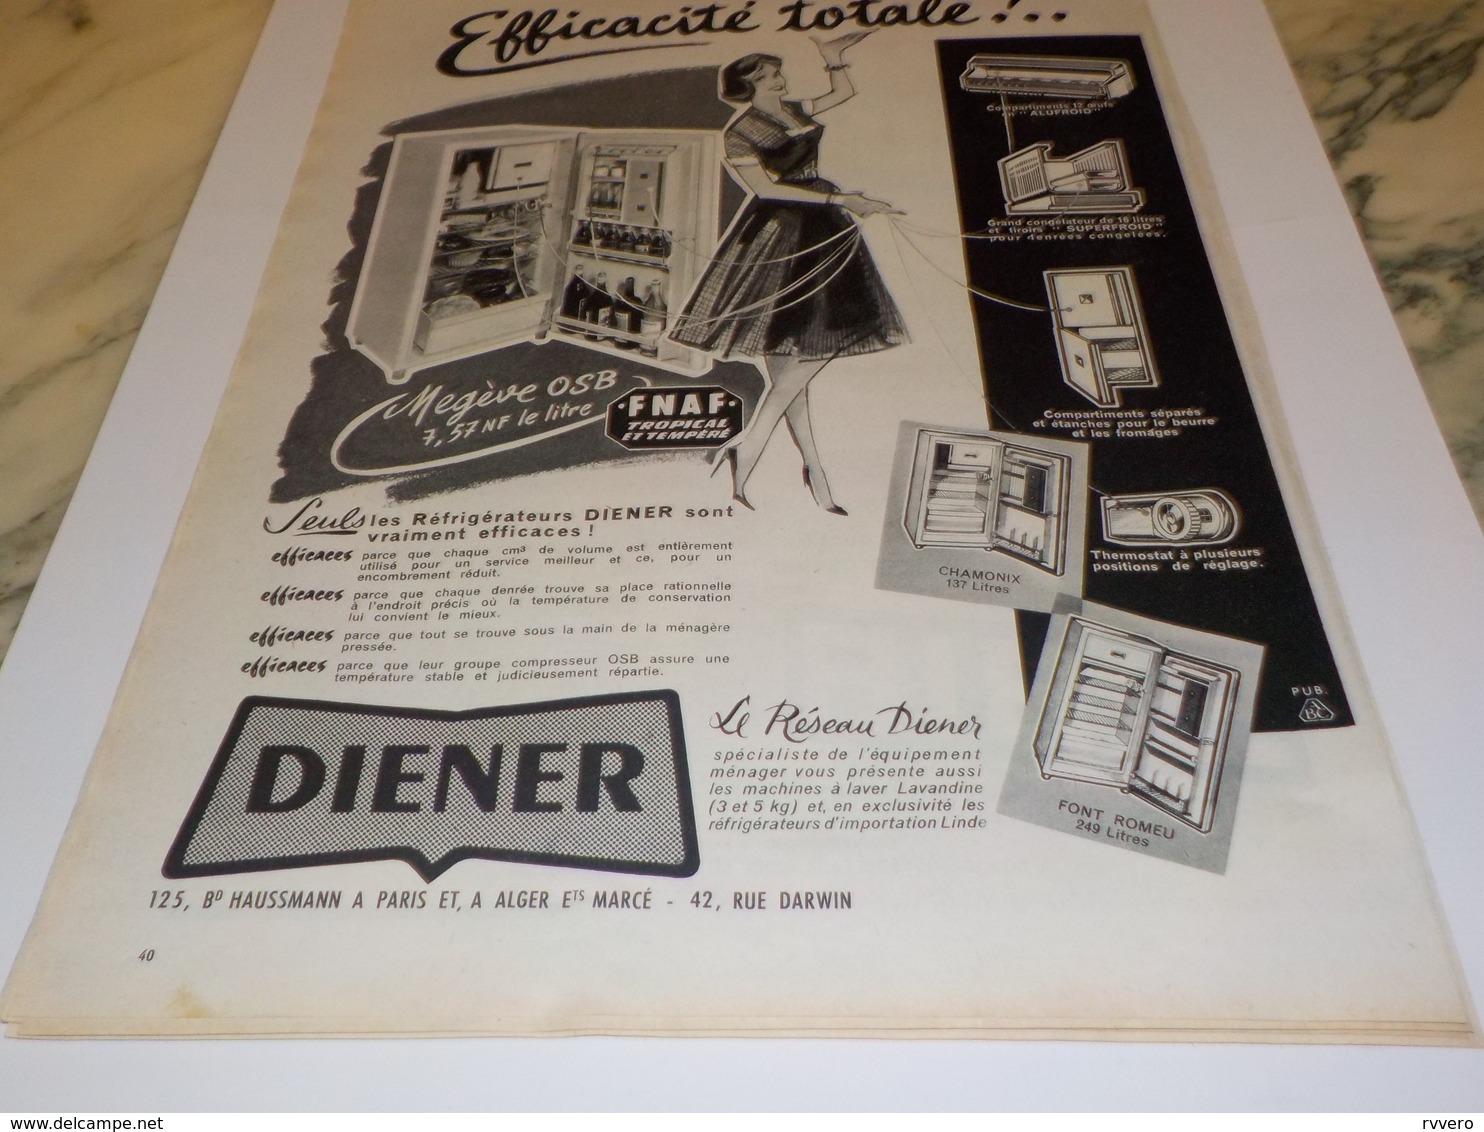 ANCIENNE  PUBLICITE EFFICACITE TOTALE  FRIGO DE DIENER 1960 - Other Apparatus